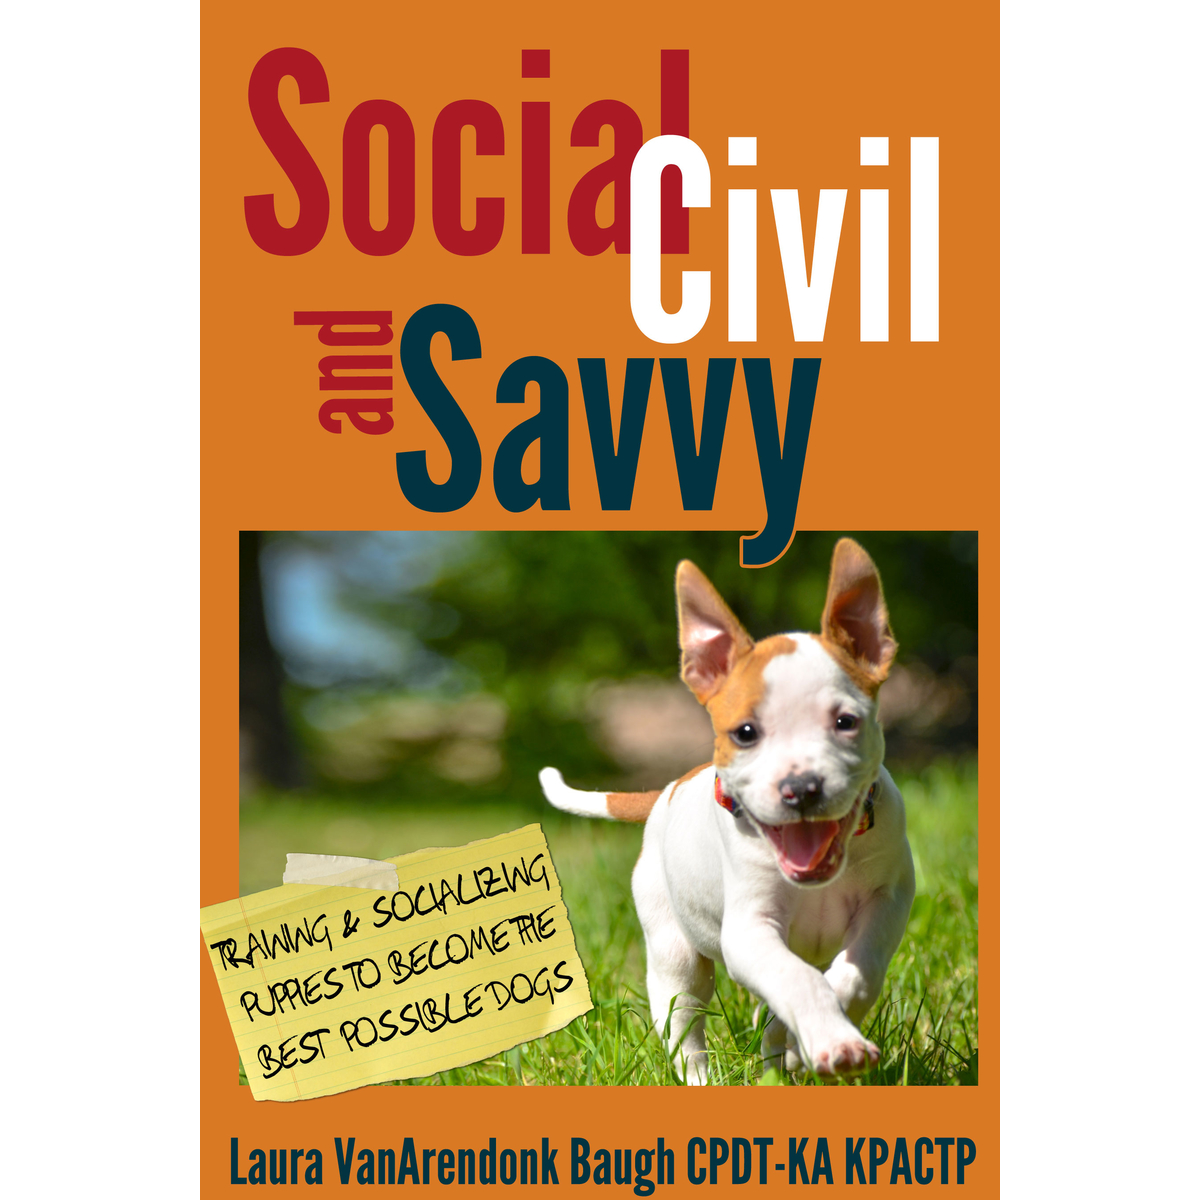 Social Civil and Savvy by Laura VanArendonk Baugh  CPDT-KA KPACTP (signed paperback)